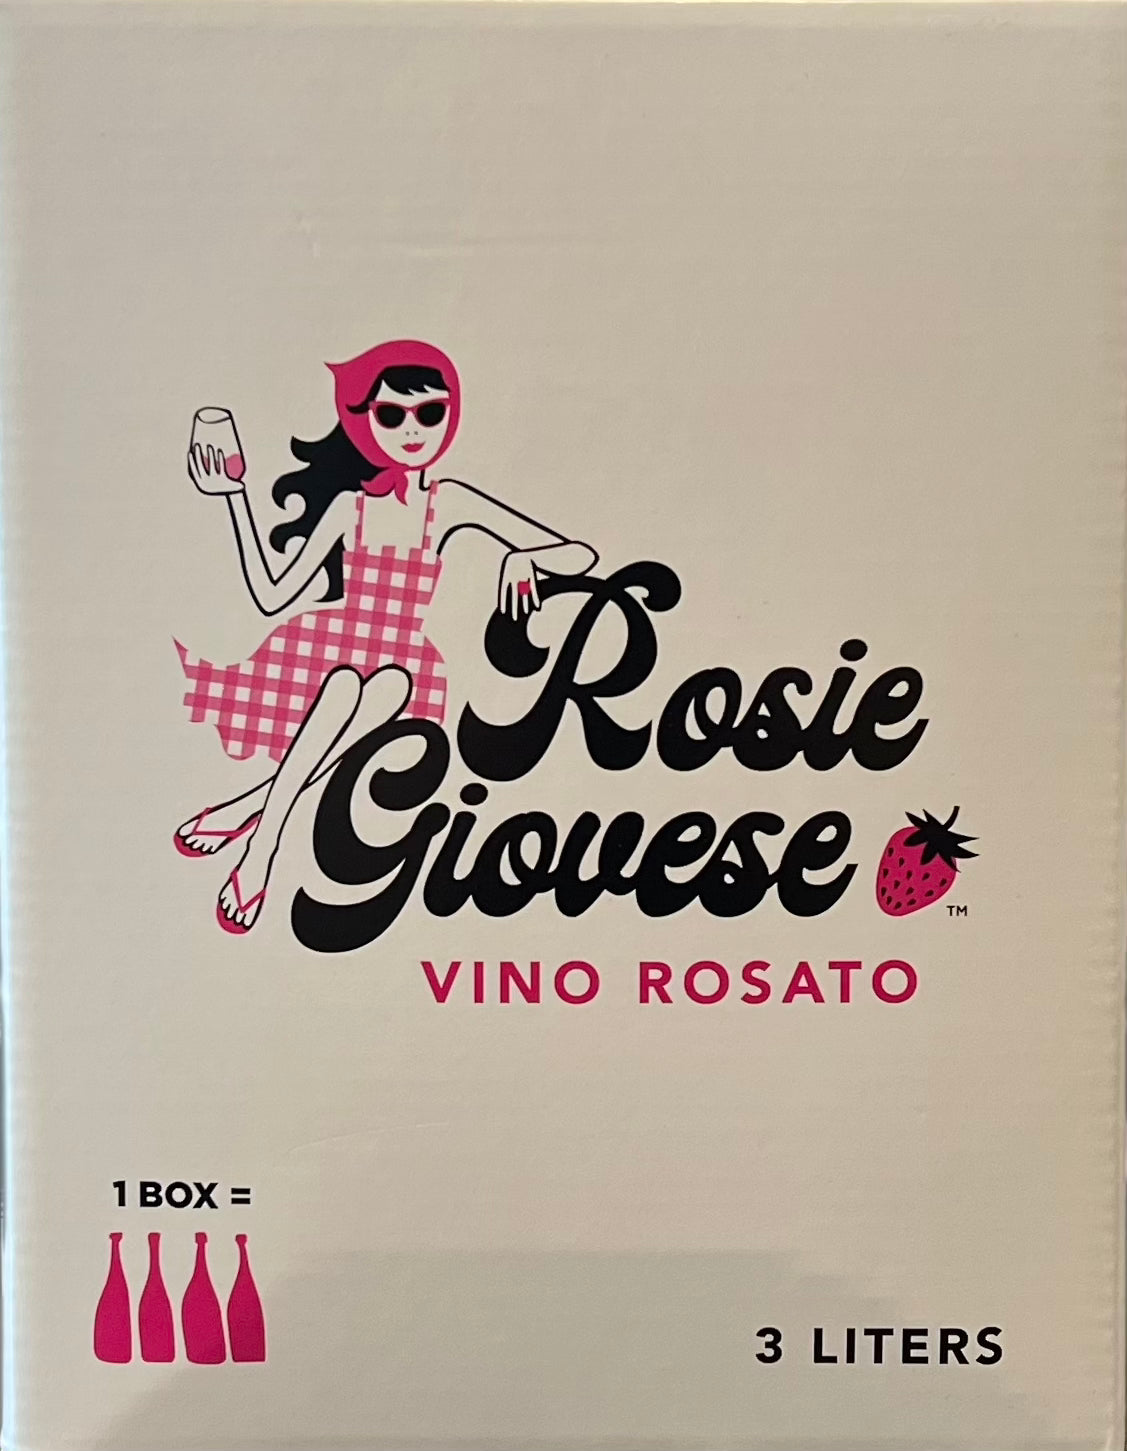 Sandy Giovese Vino Rosato